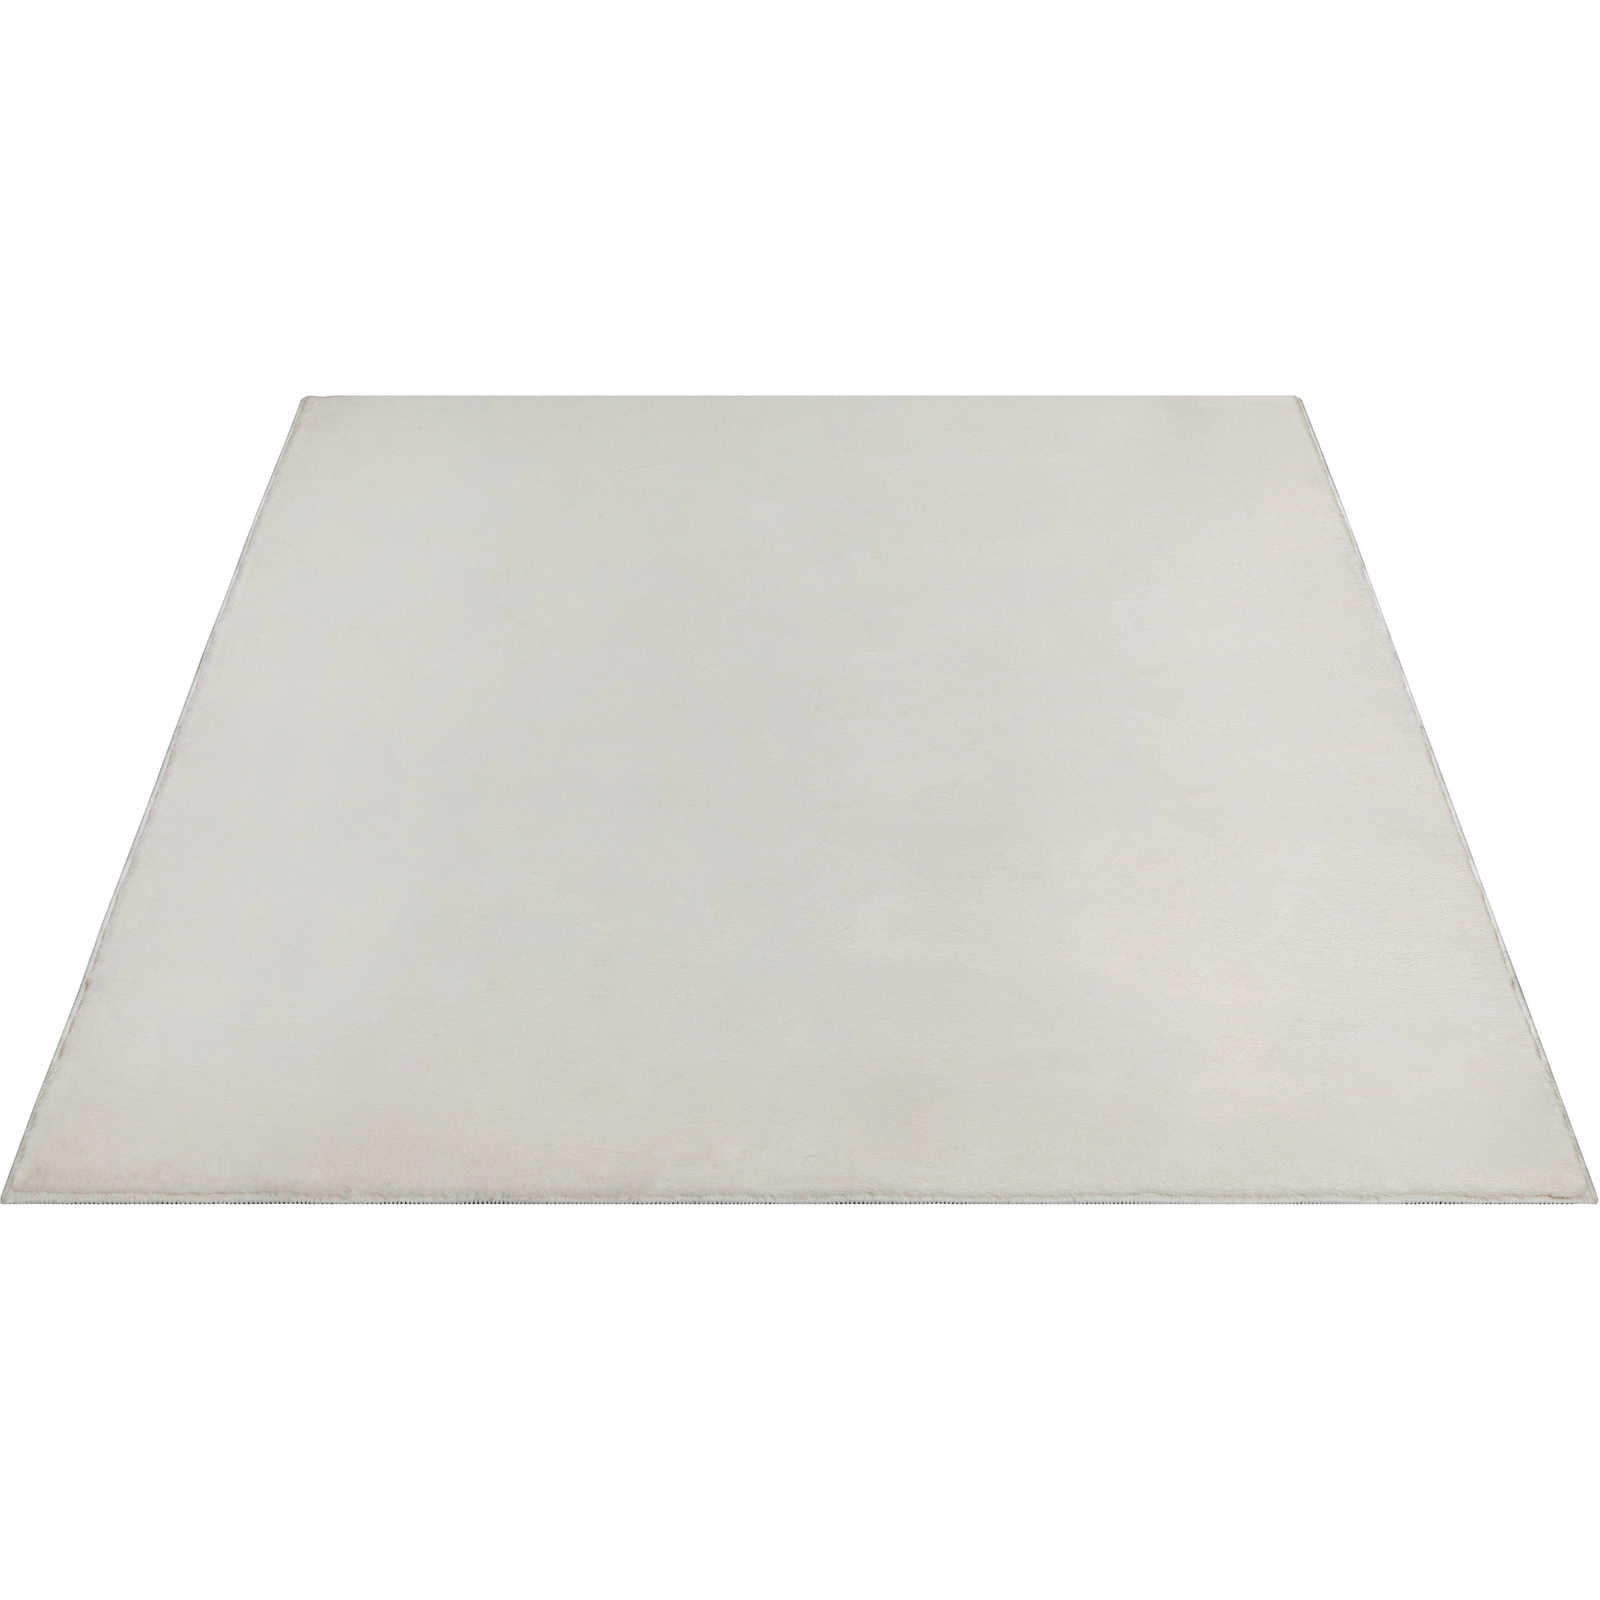 Soft high pile carpet in cream - 340 x 240 cm
